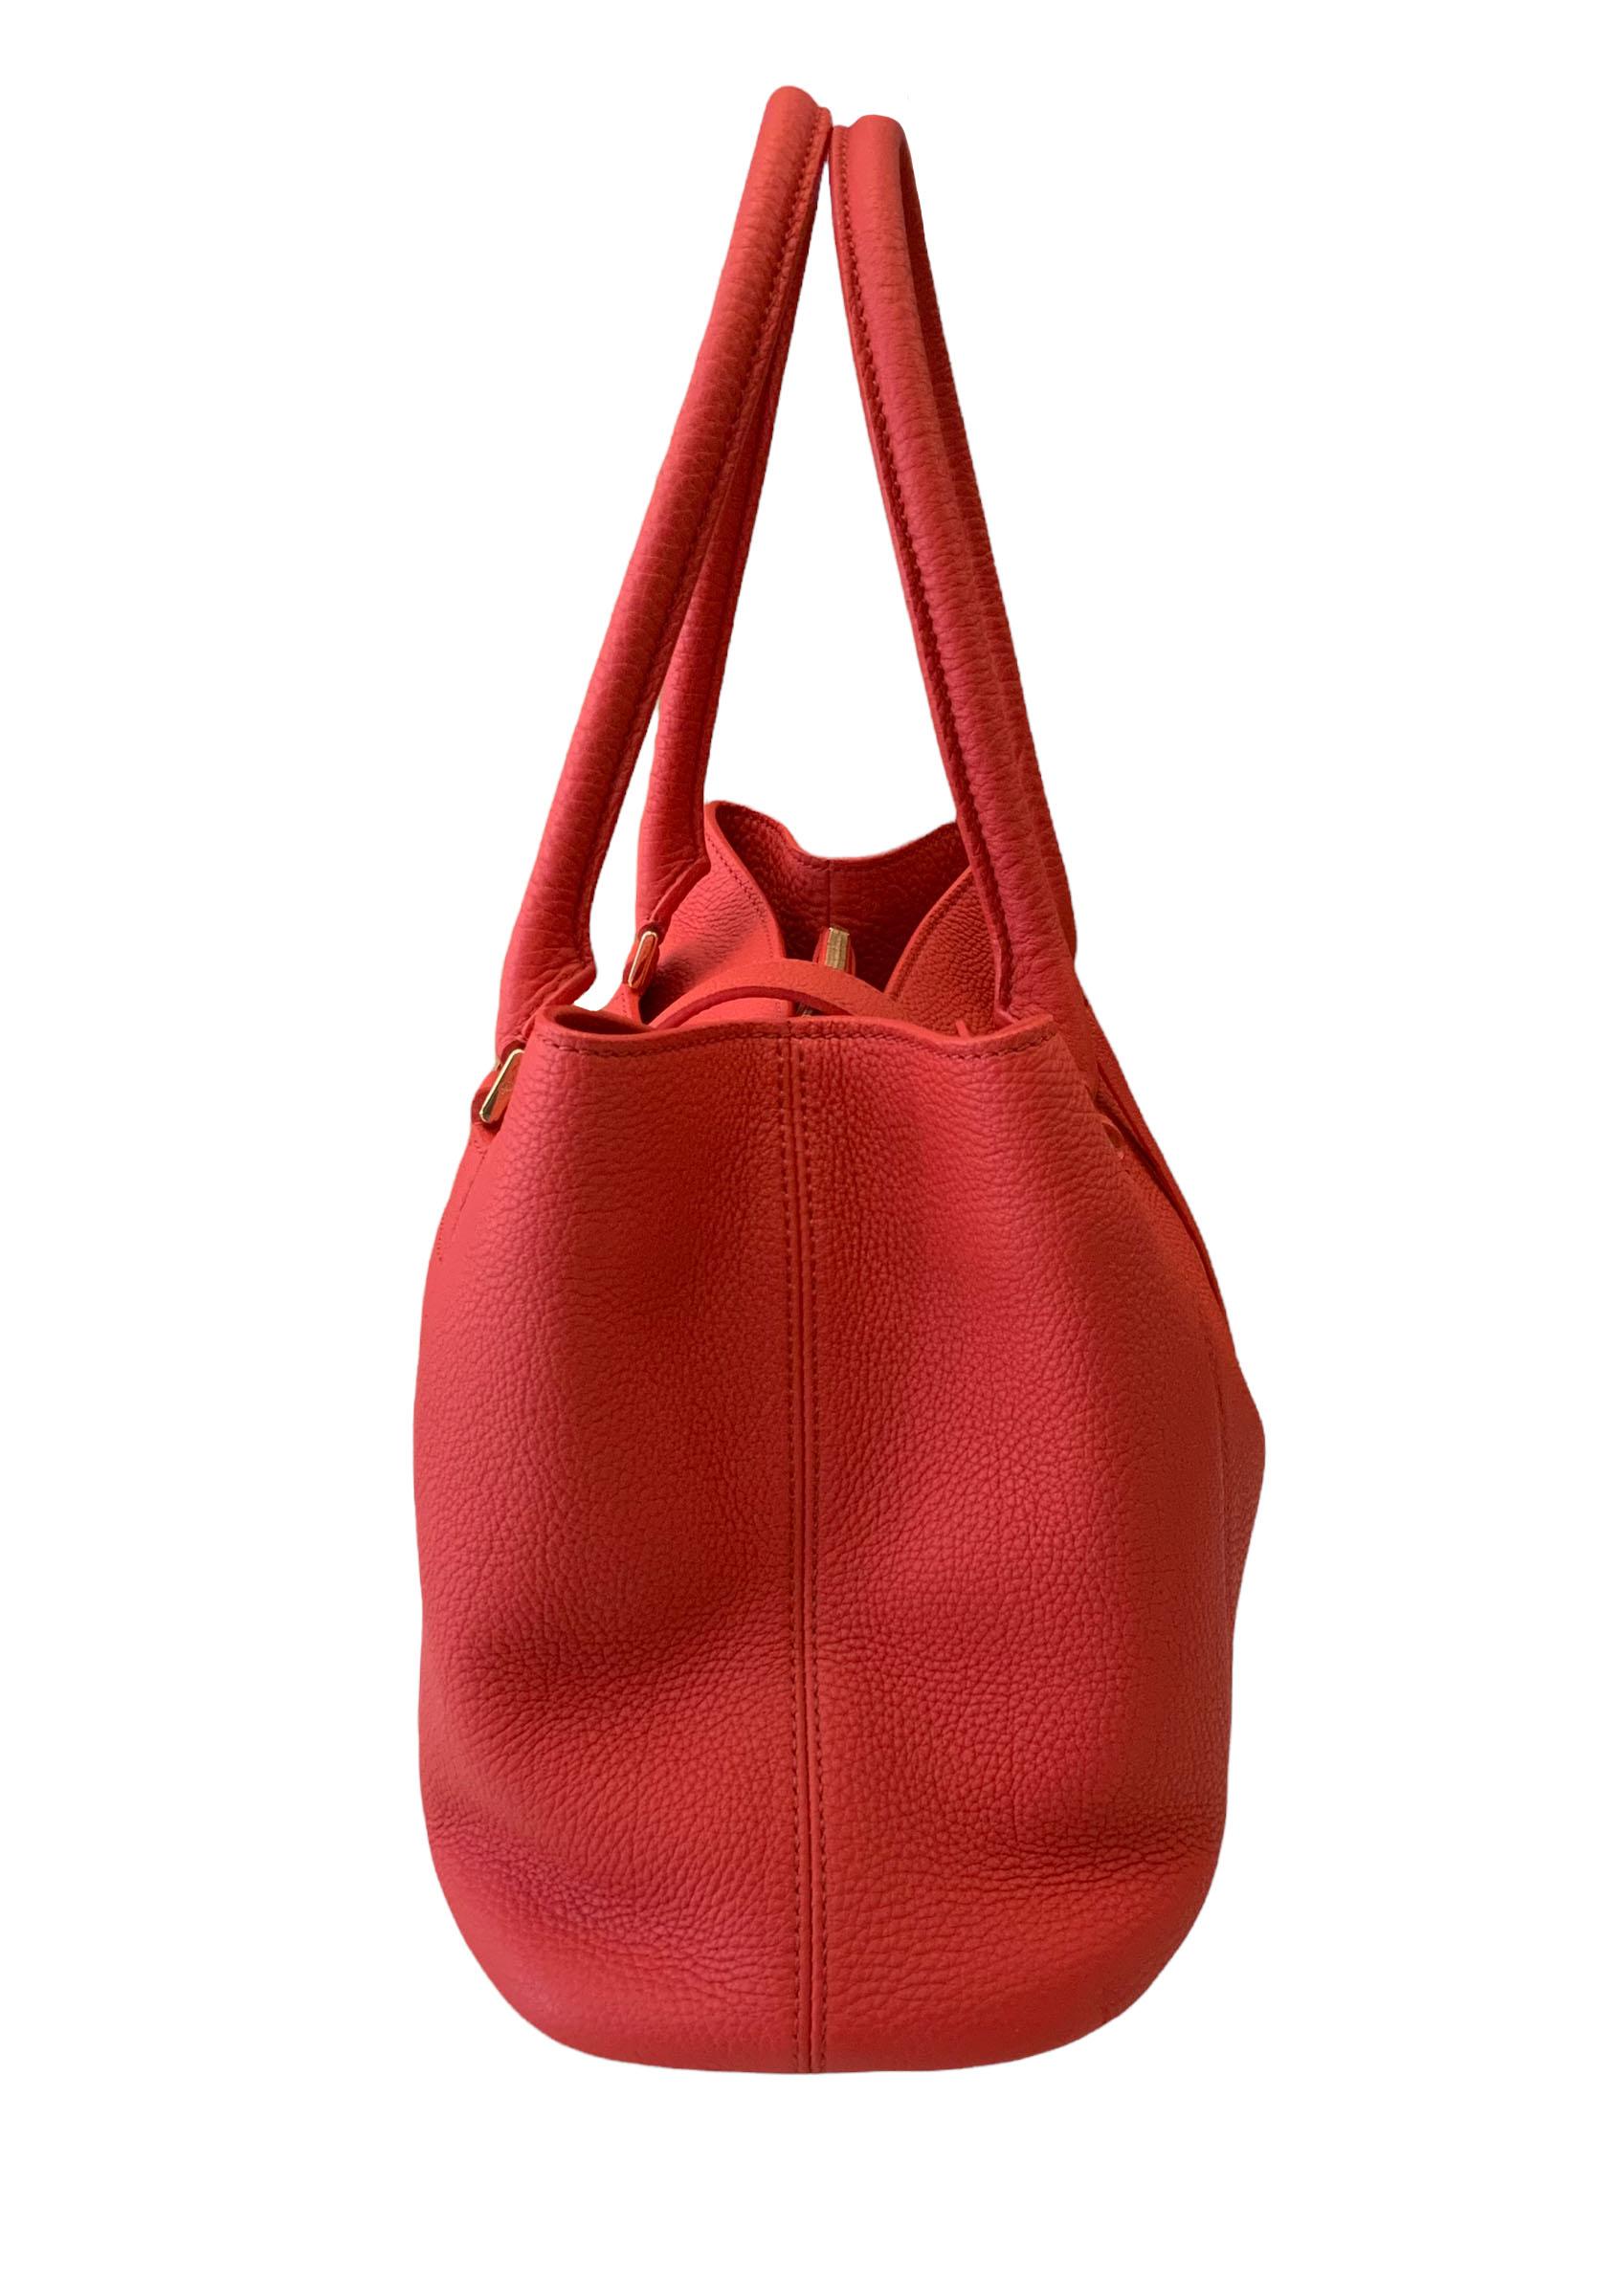 Loro Piana Geranium Leather Bellevue Bag For Sale 4